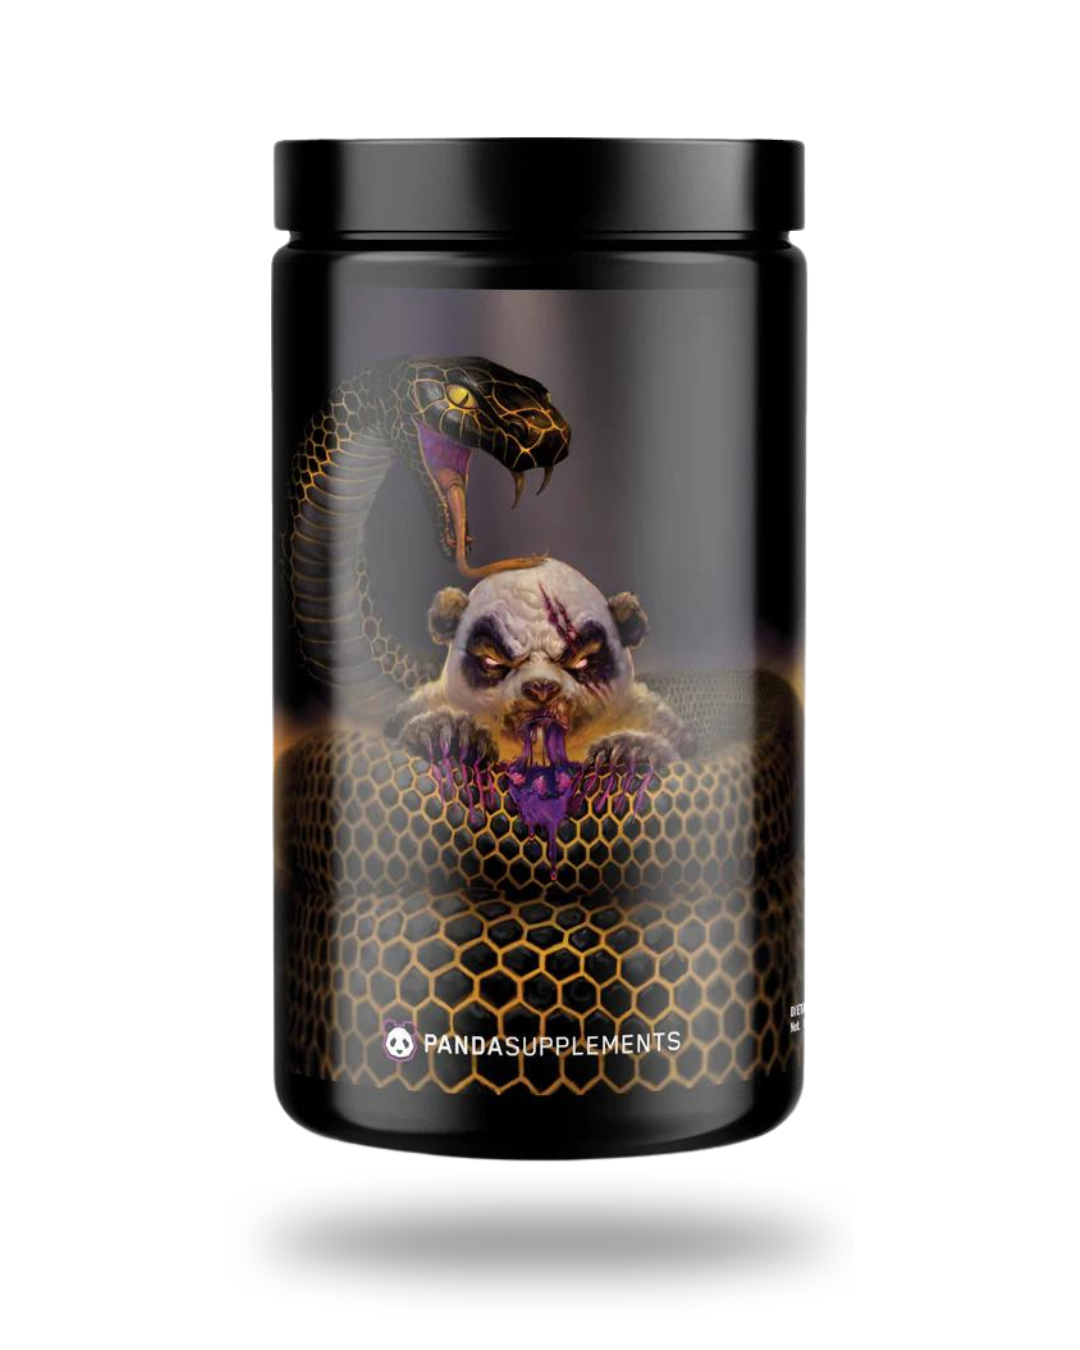 Panda Supplements | Pandamic Extreme | Preworkout *limited edition*